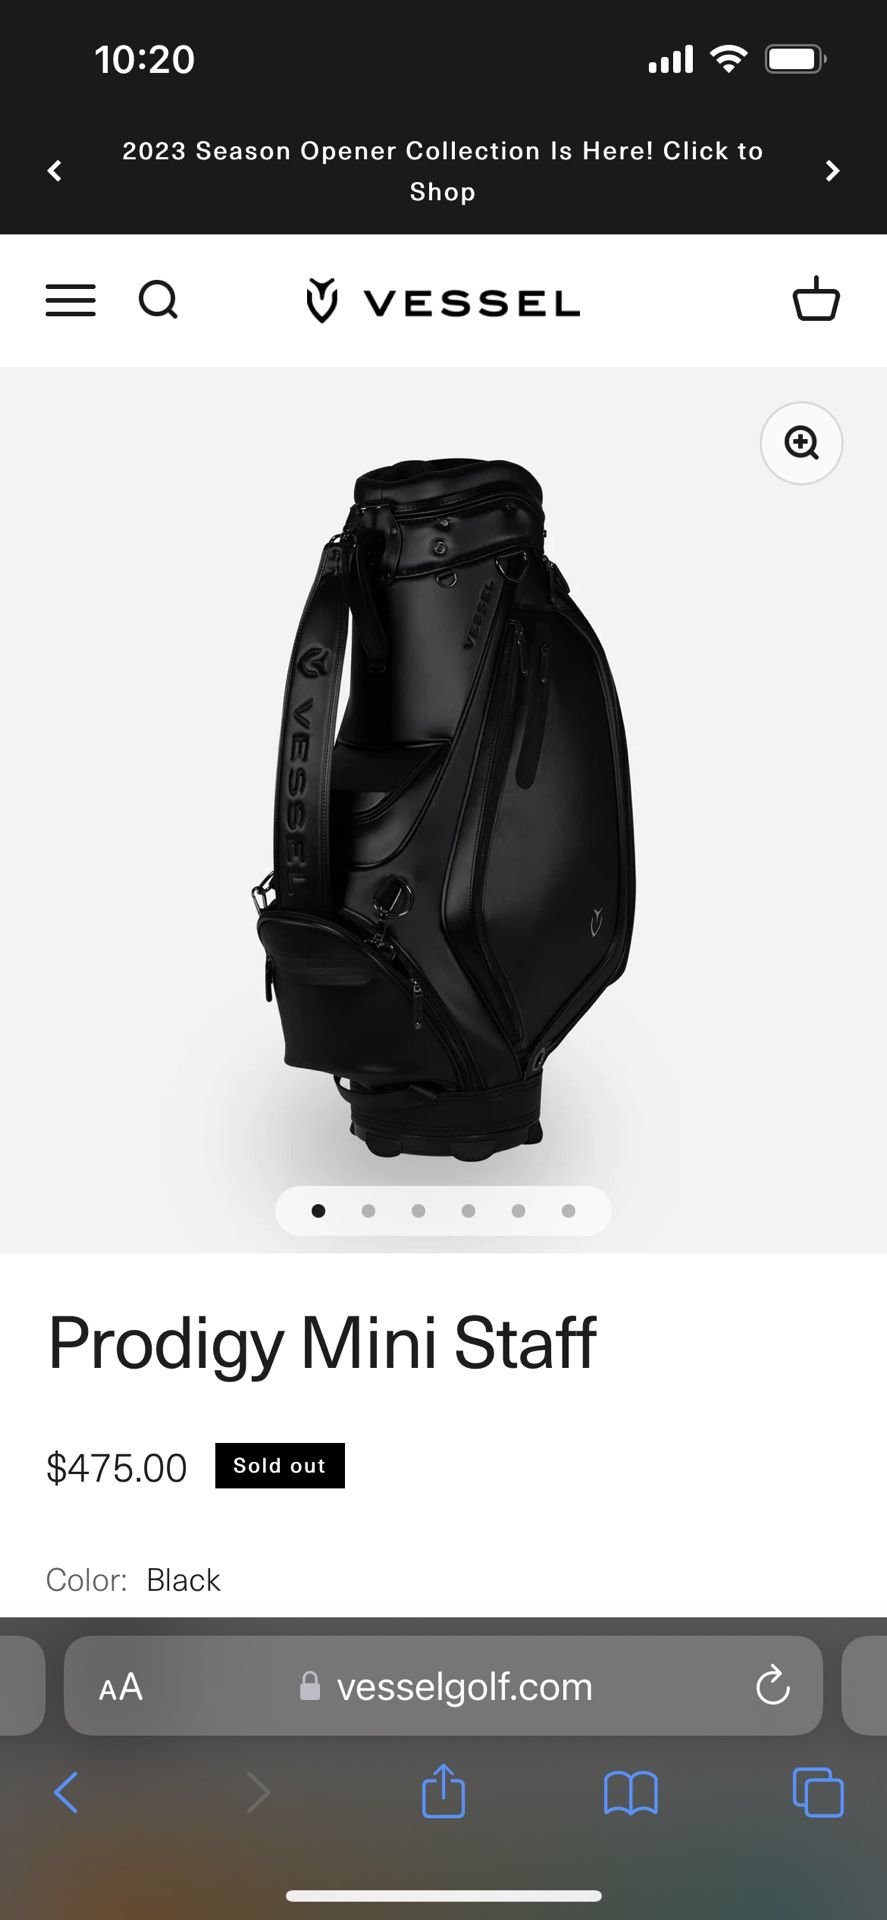 Buy Vessel Prodigy Mini Staff Bag Online India